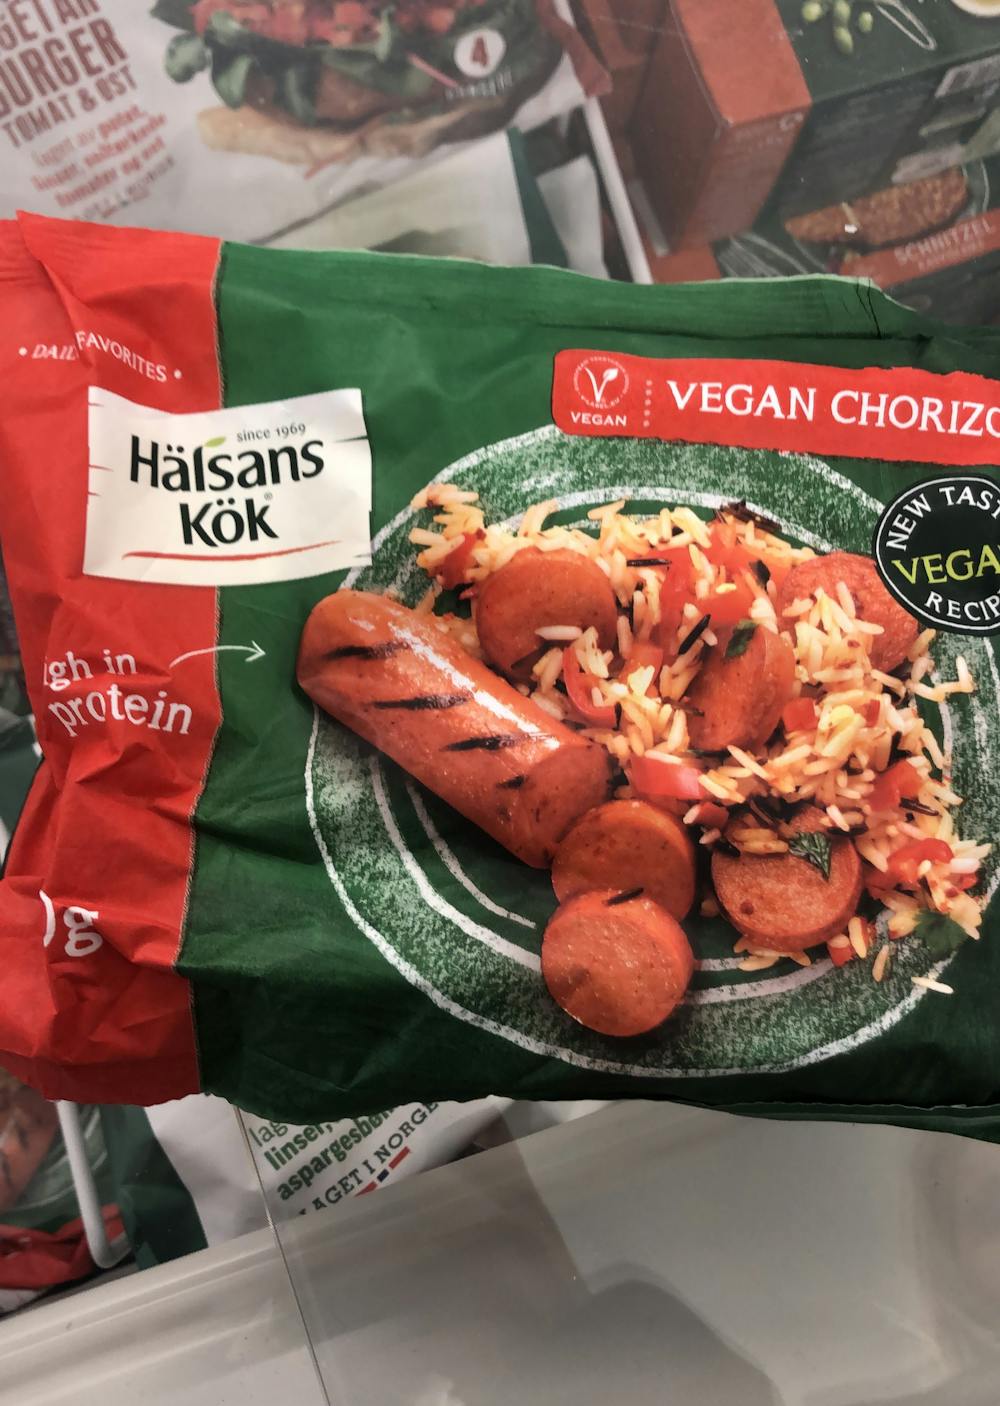 Vegan chorizo, Hälsans kök